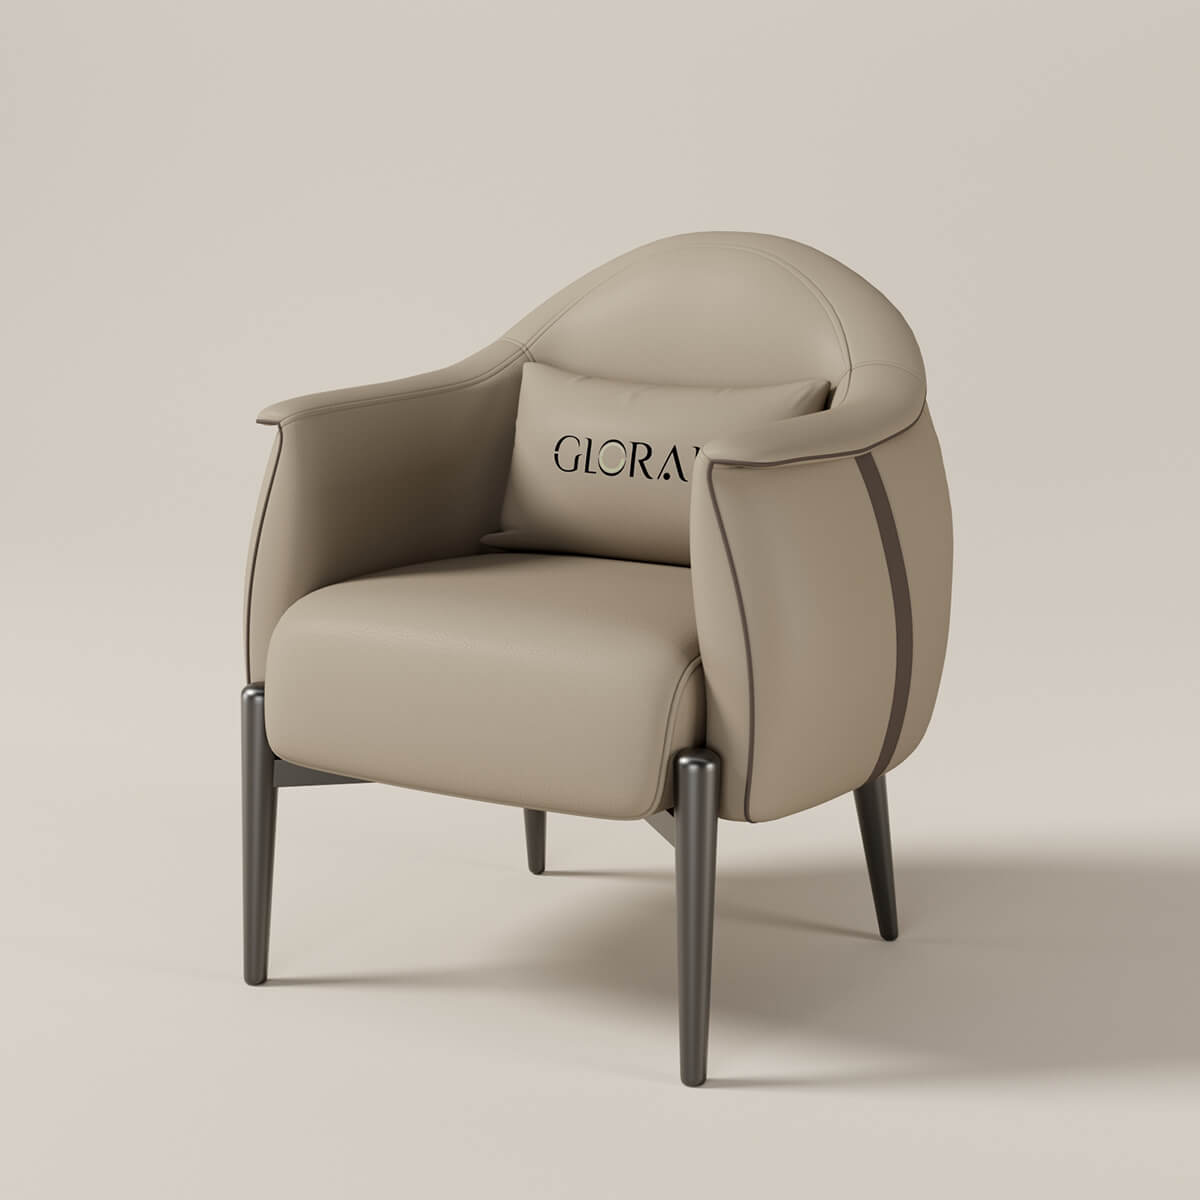 Glorall beauty salon furniture nail chair for manicure set salon customer chair